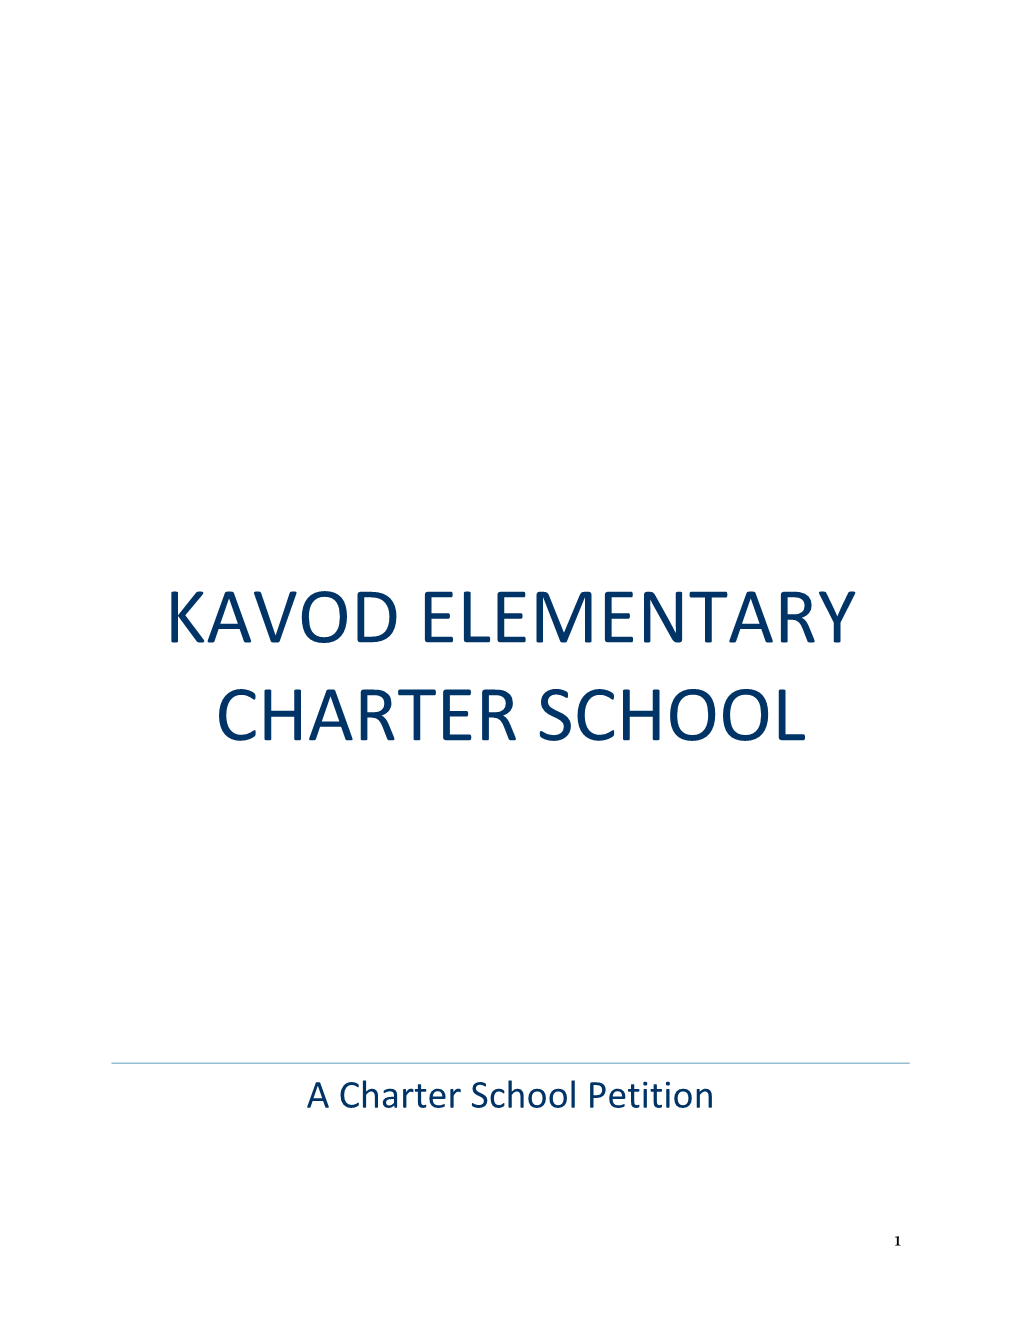 Kavod Elementary Charter School